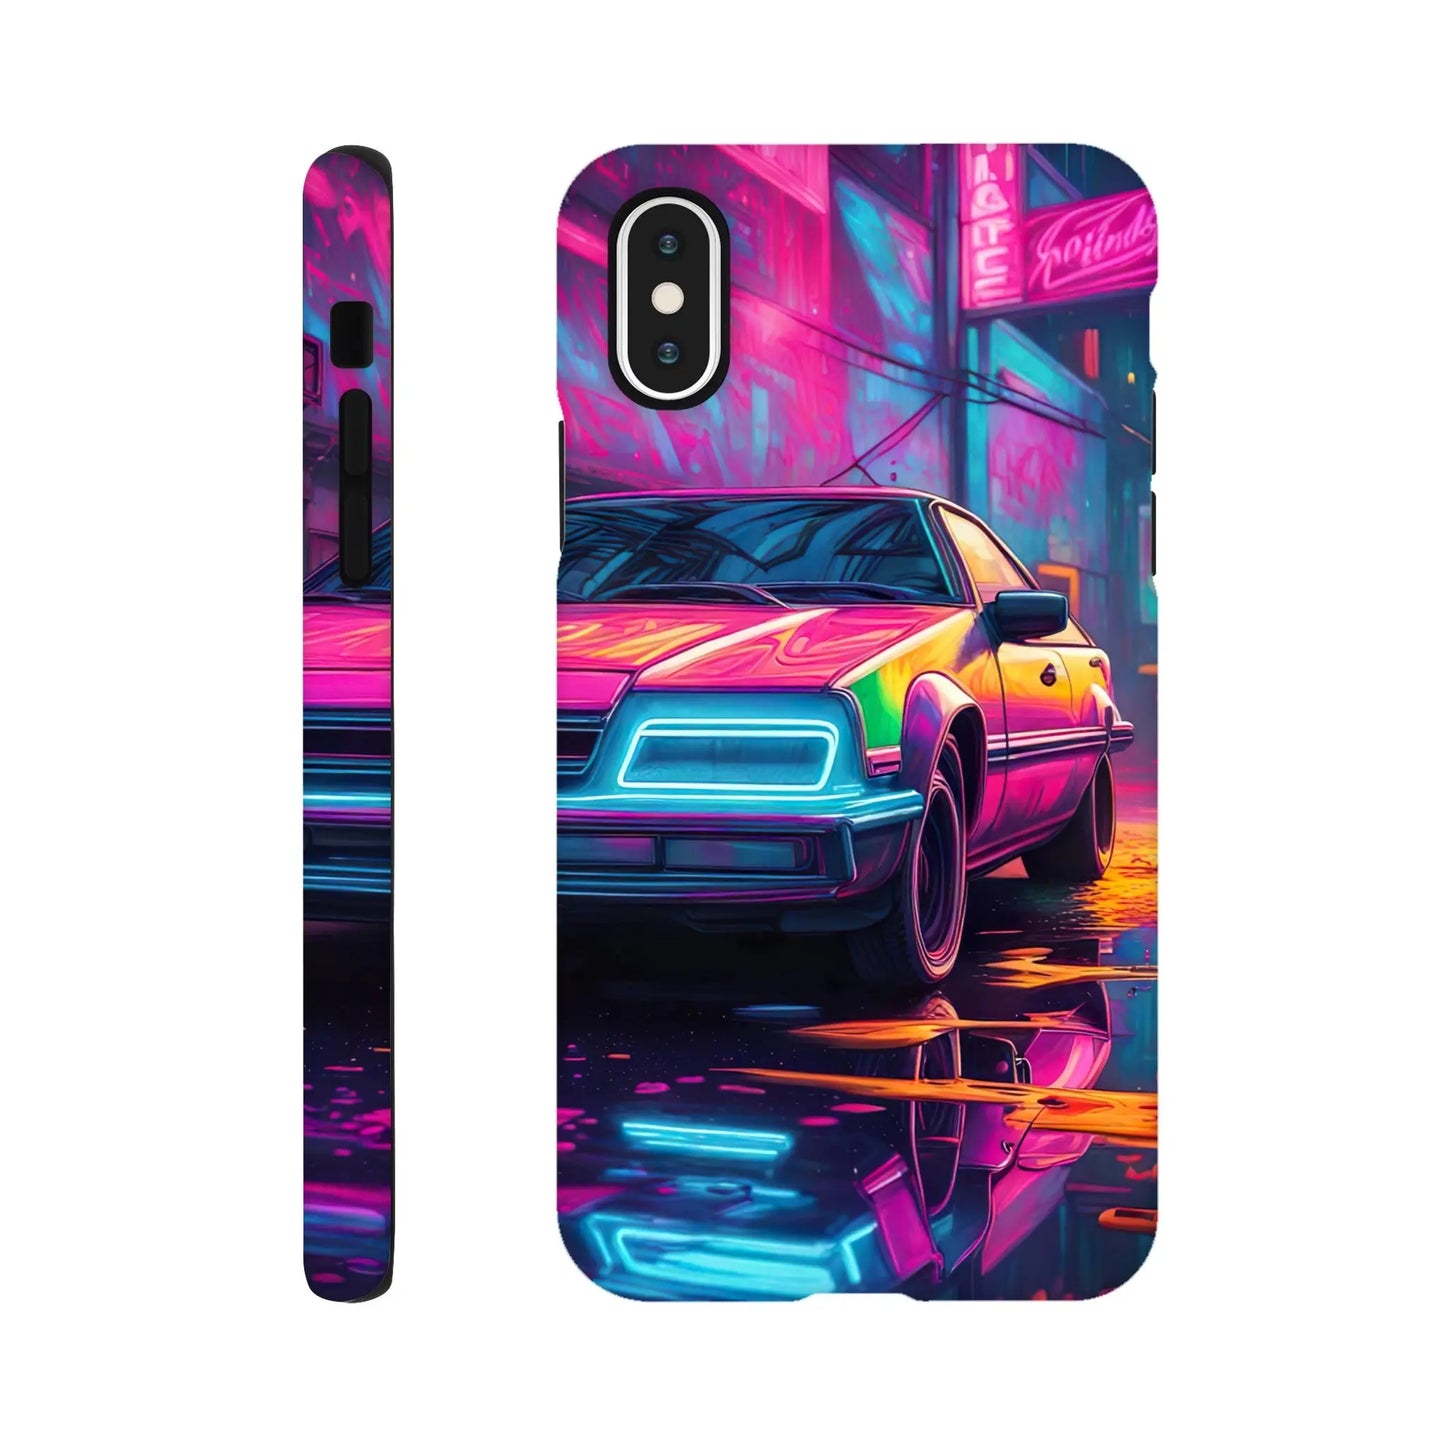 Smartphone-Hülle "Hart" - Retro Auto - Neon Stil, KI-Kunst RolConArt, Neon, iPhone-XS